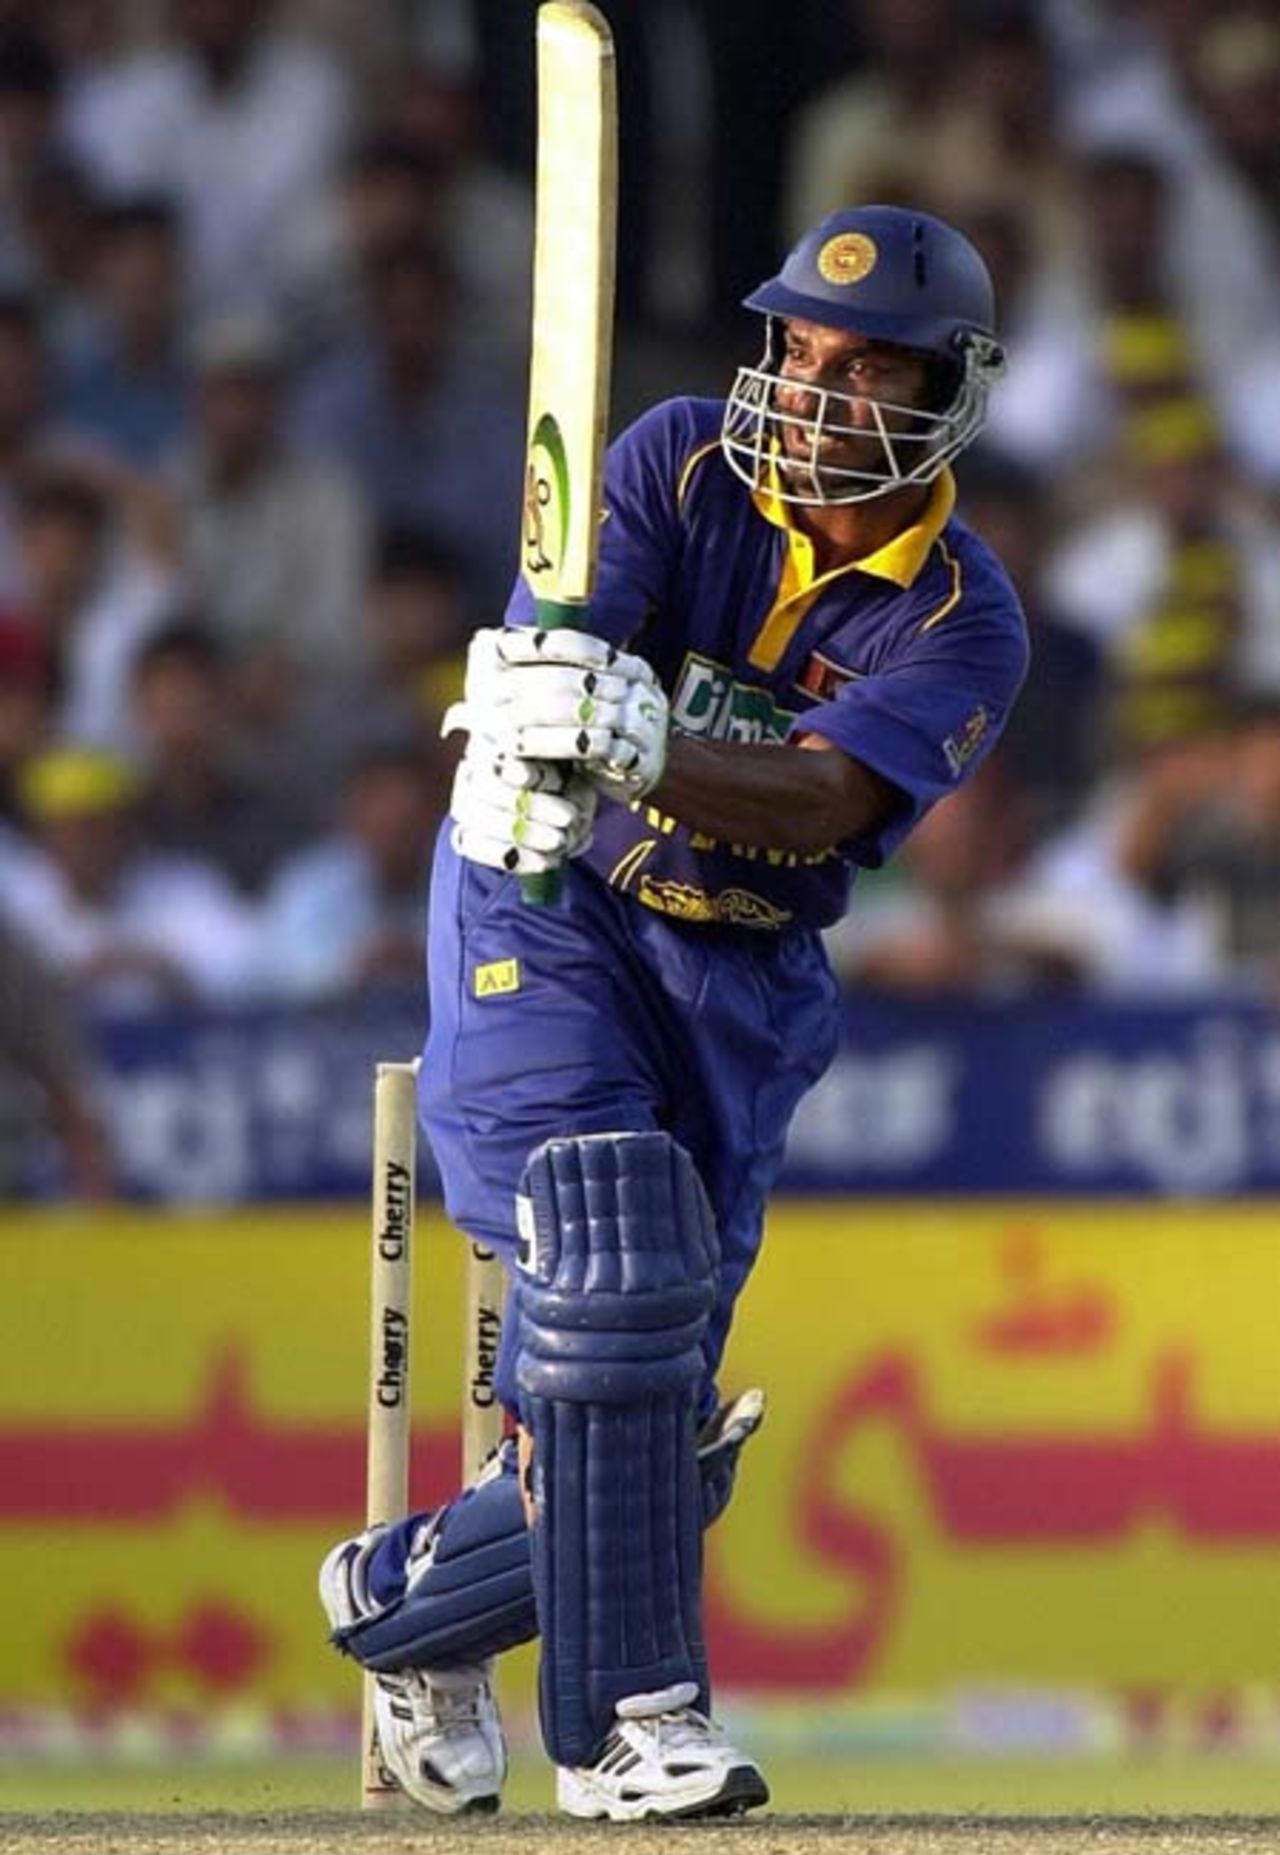 Sri Lankan middle order batsman and the highest scorer Kumar Sangakkara plays during his brilliant century inning against Pakistan in the Four Nation Sharjah Cricket Tournament, 04 April 2003.